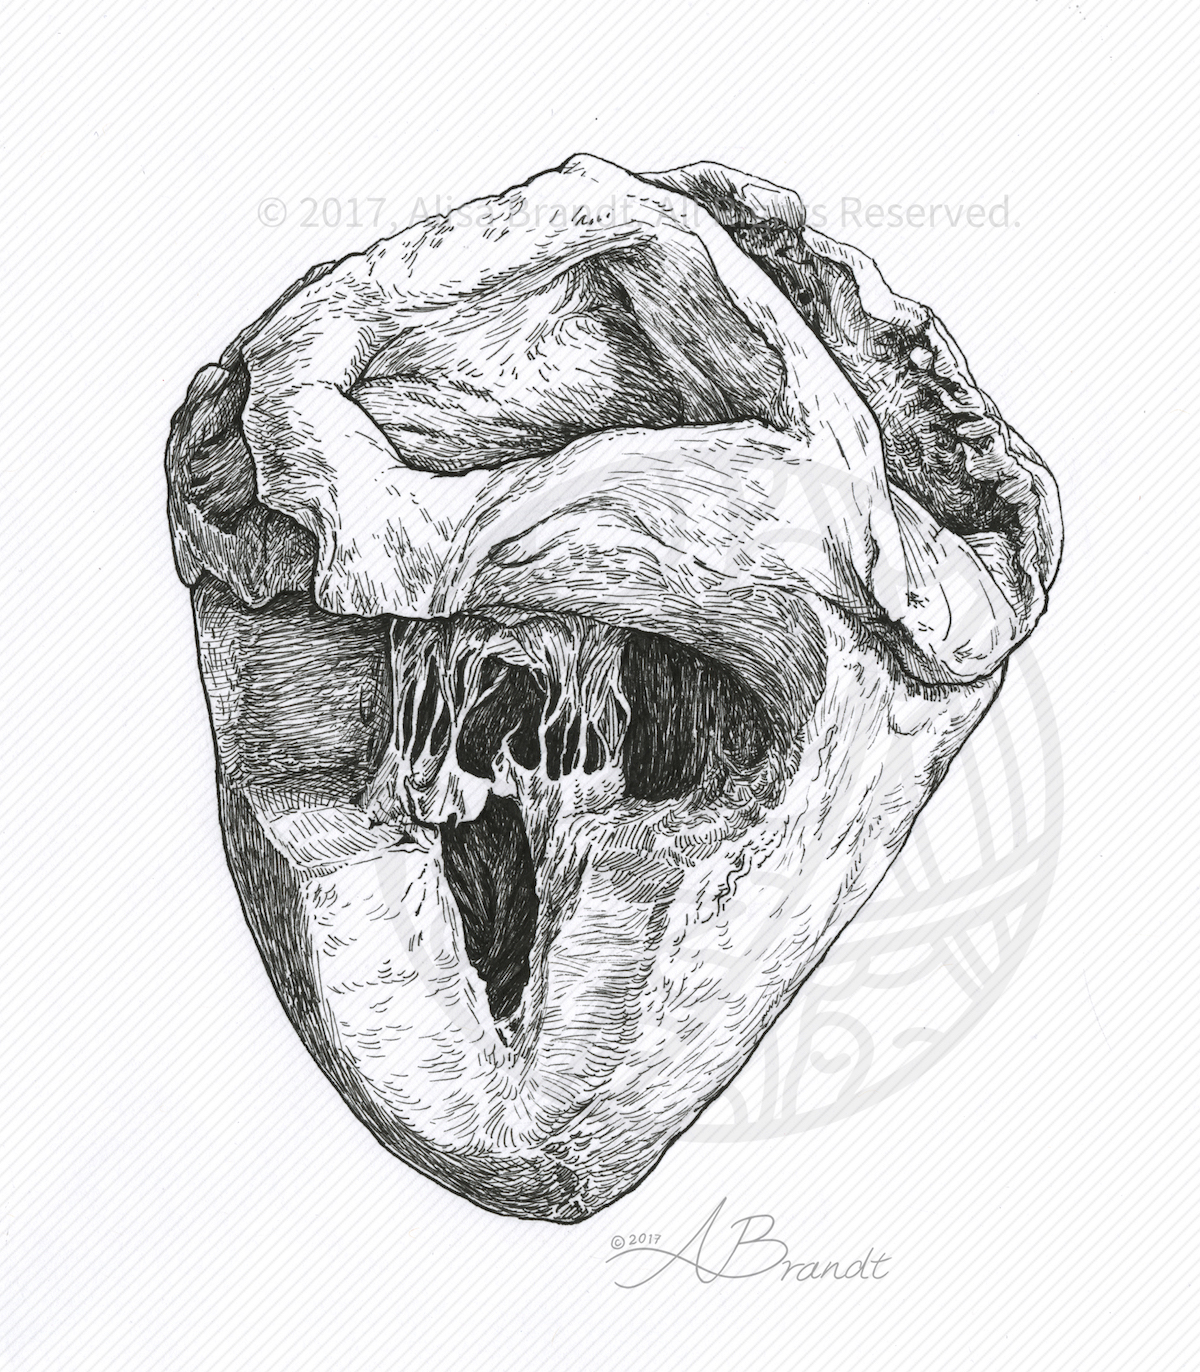 Pen and ink sketch of plastinated heart specimen © 2017 Alisa Brandt